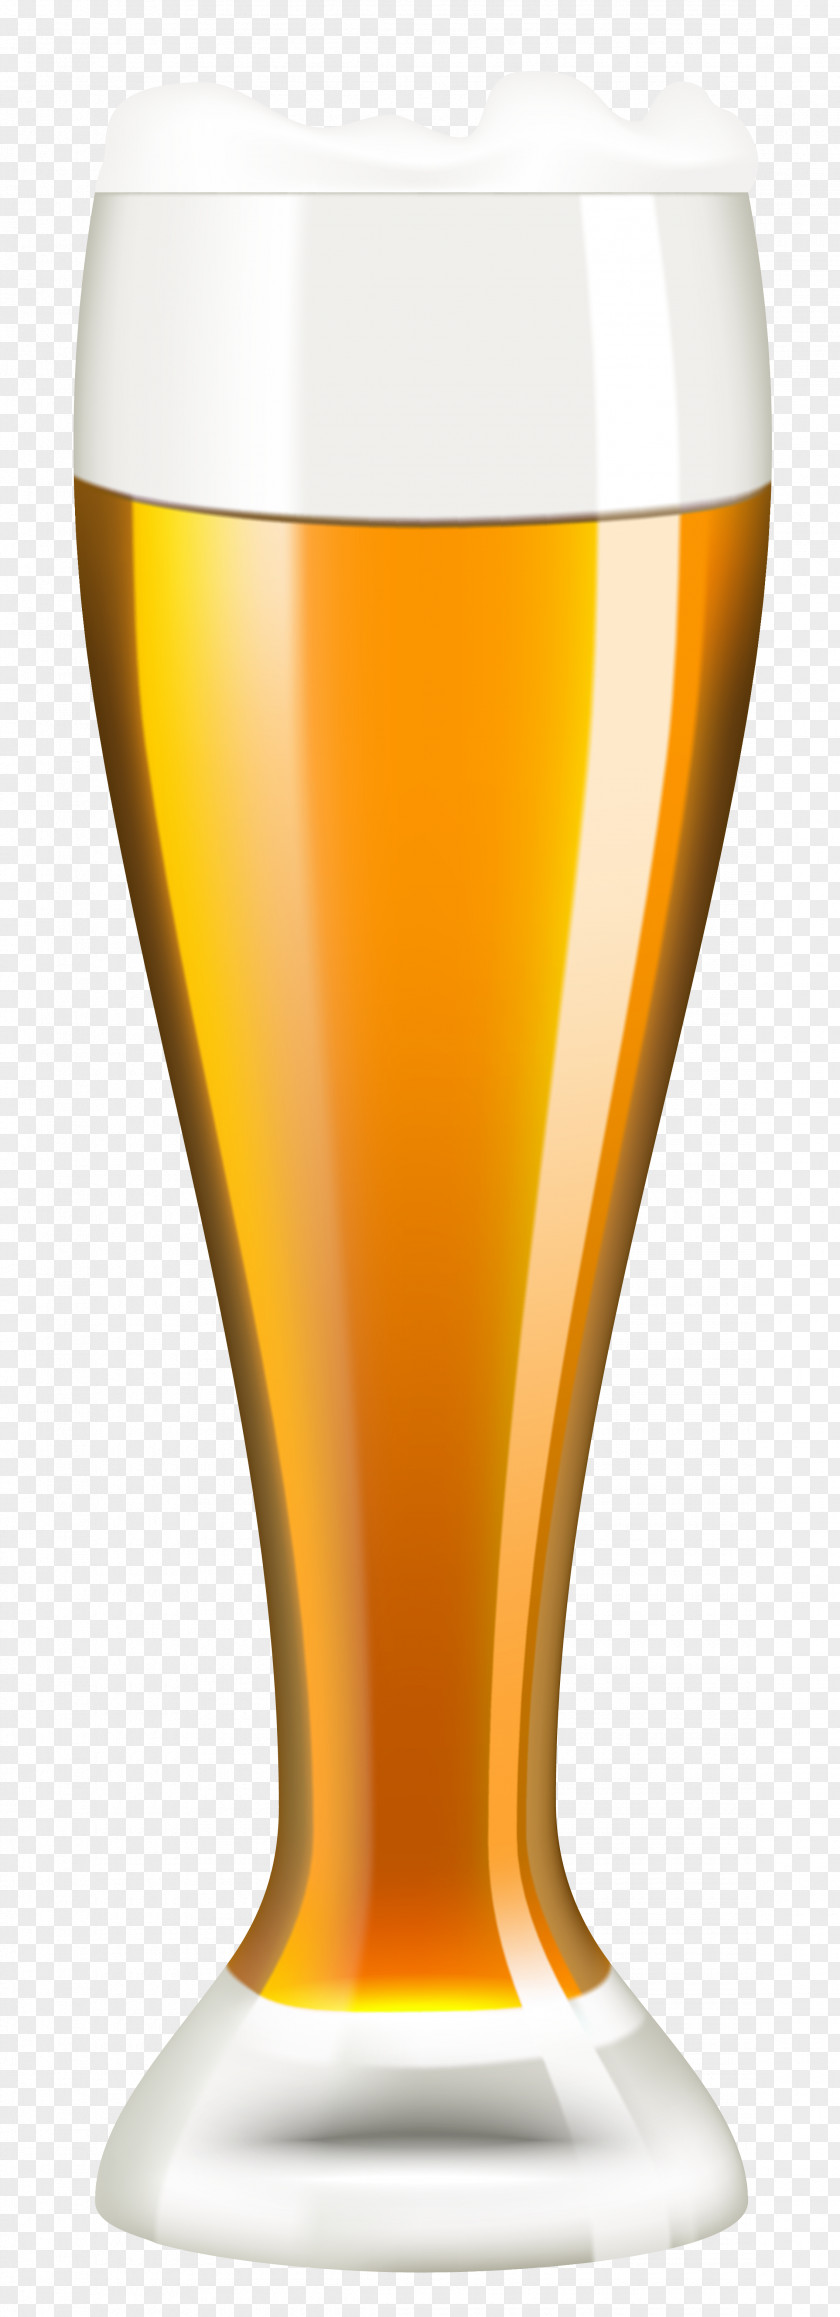 Beer Glasses Cocktail PNG